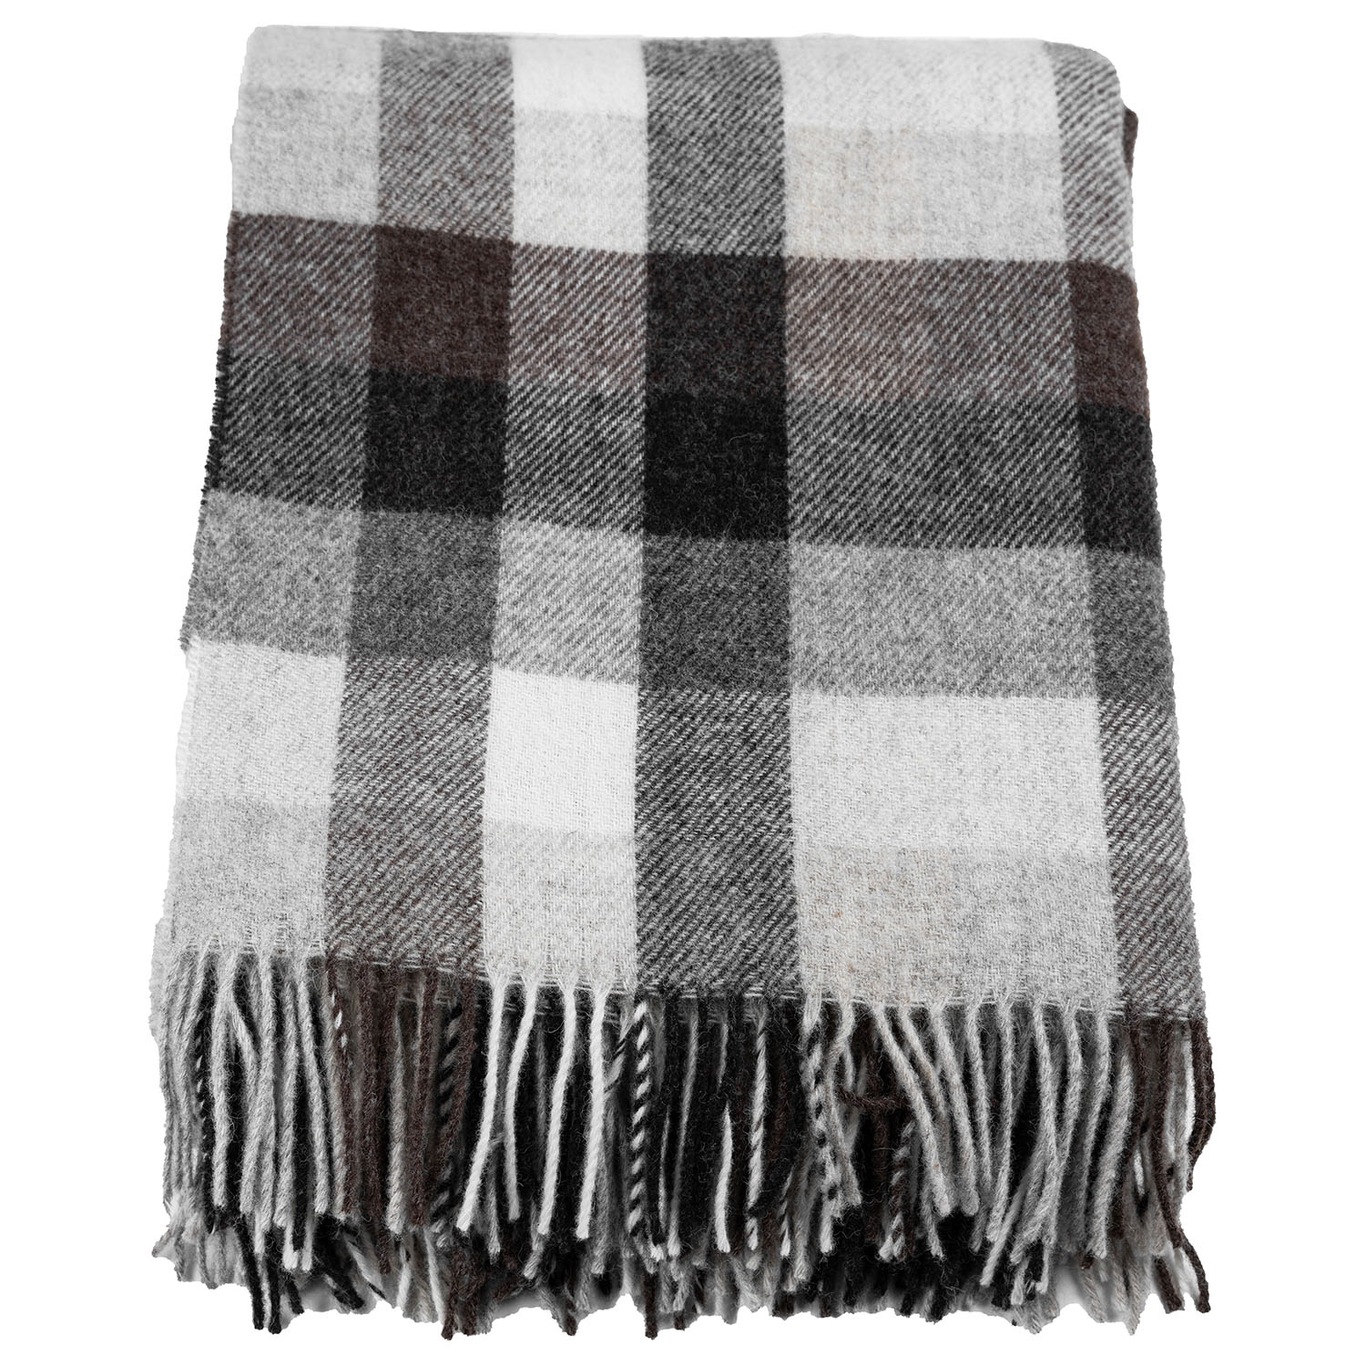 Wool Blanket Checked Grey, brown, offwhite Decke 130x170 cm Braun Grau Off-white